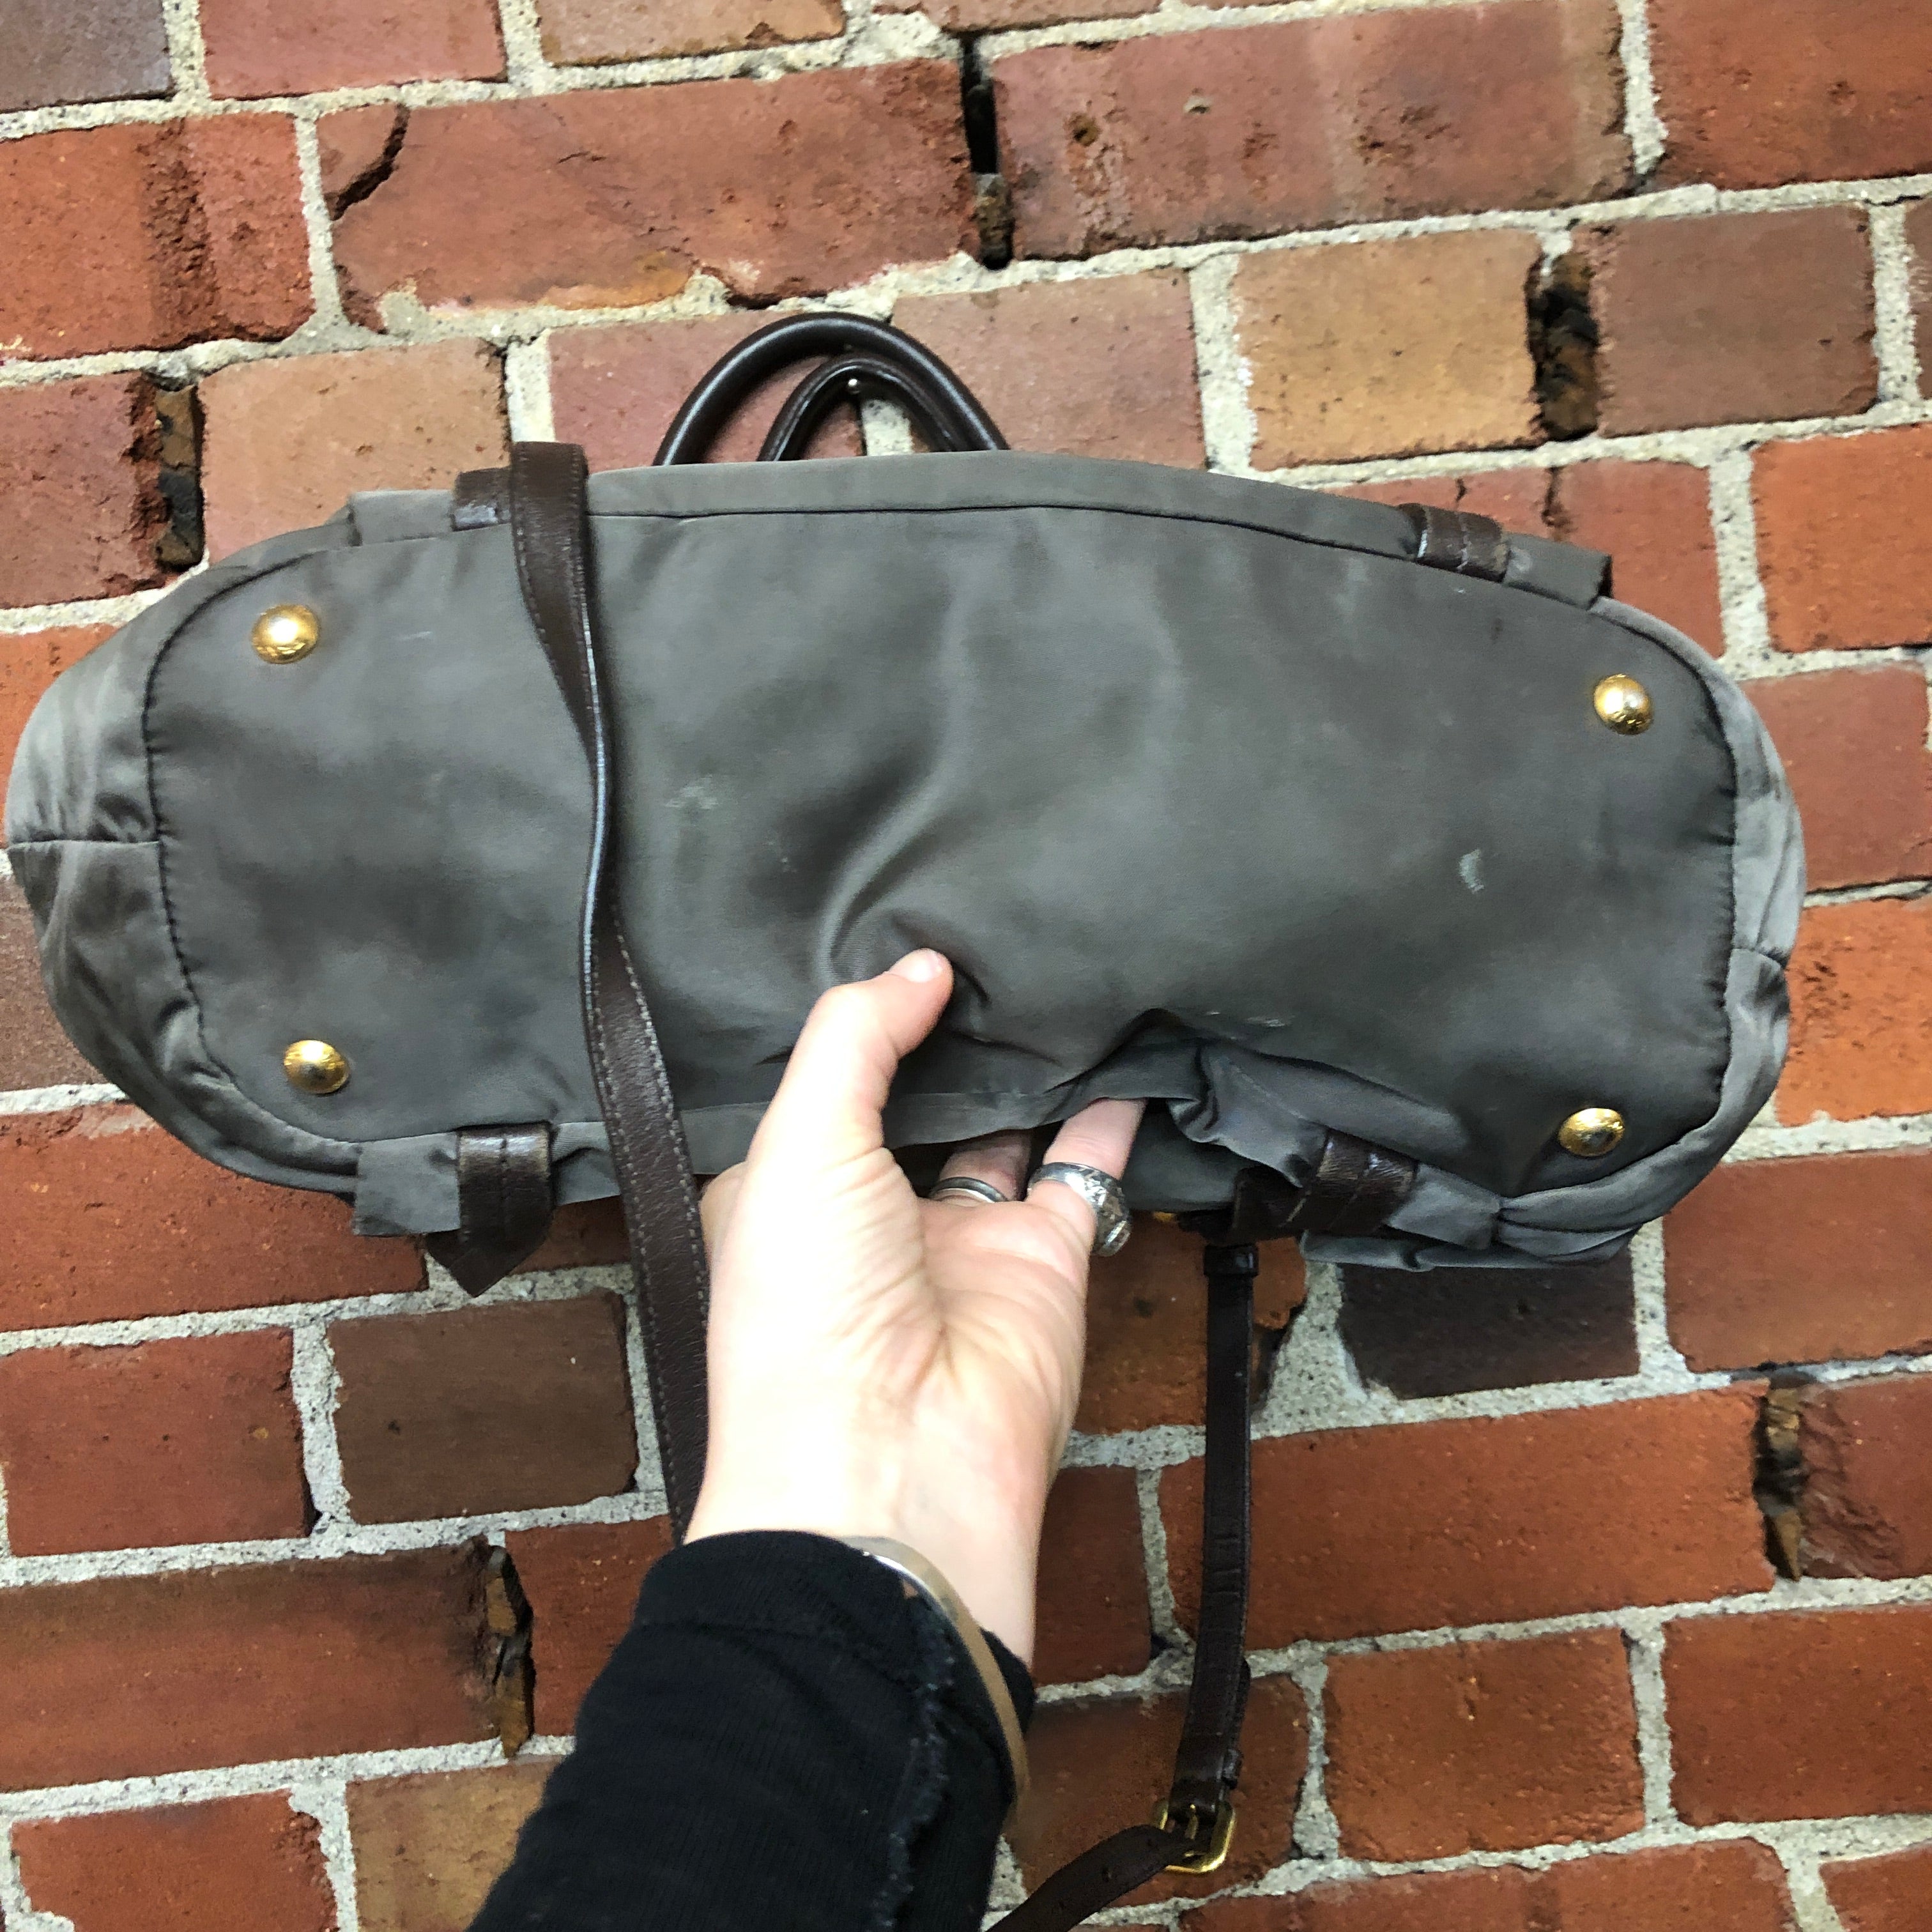 PRADA nylon and leather handbag